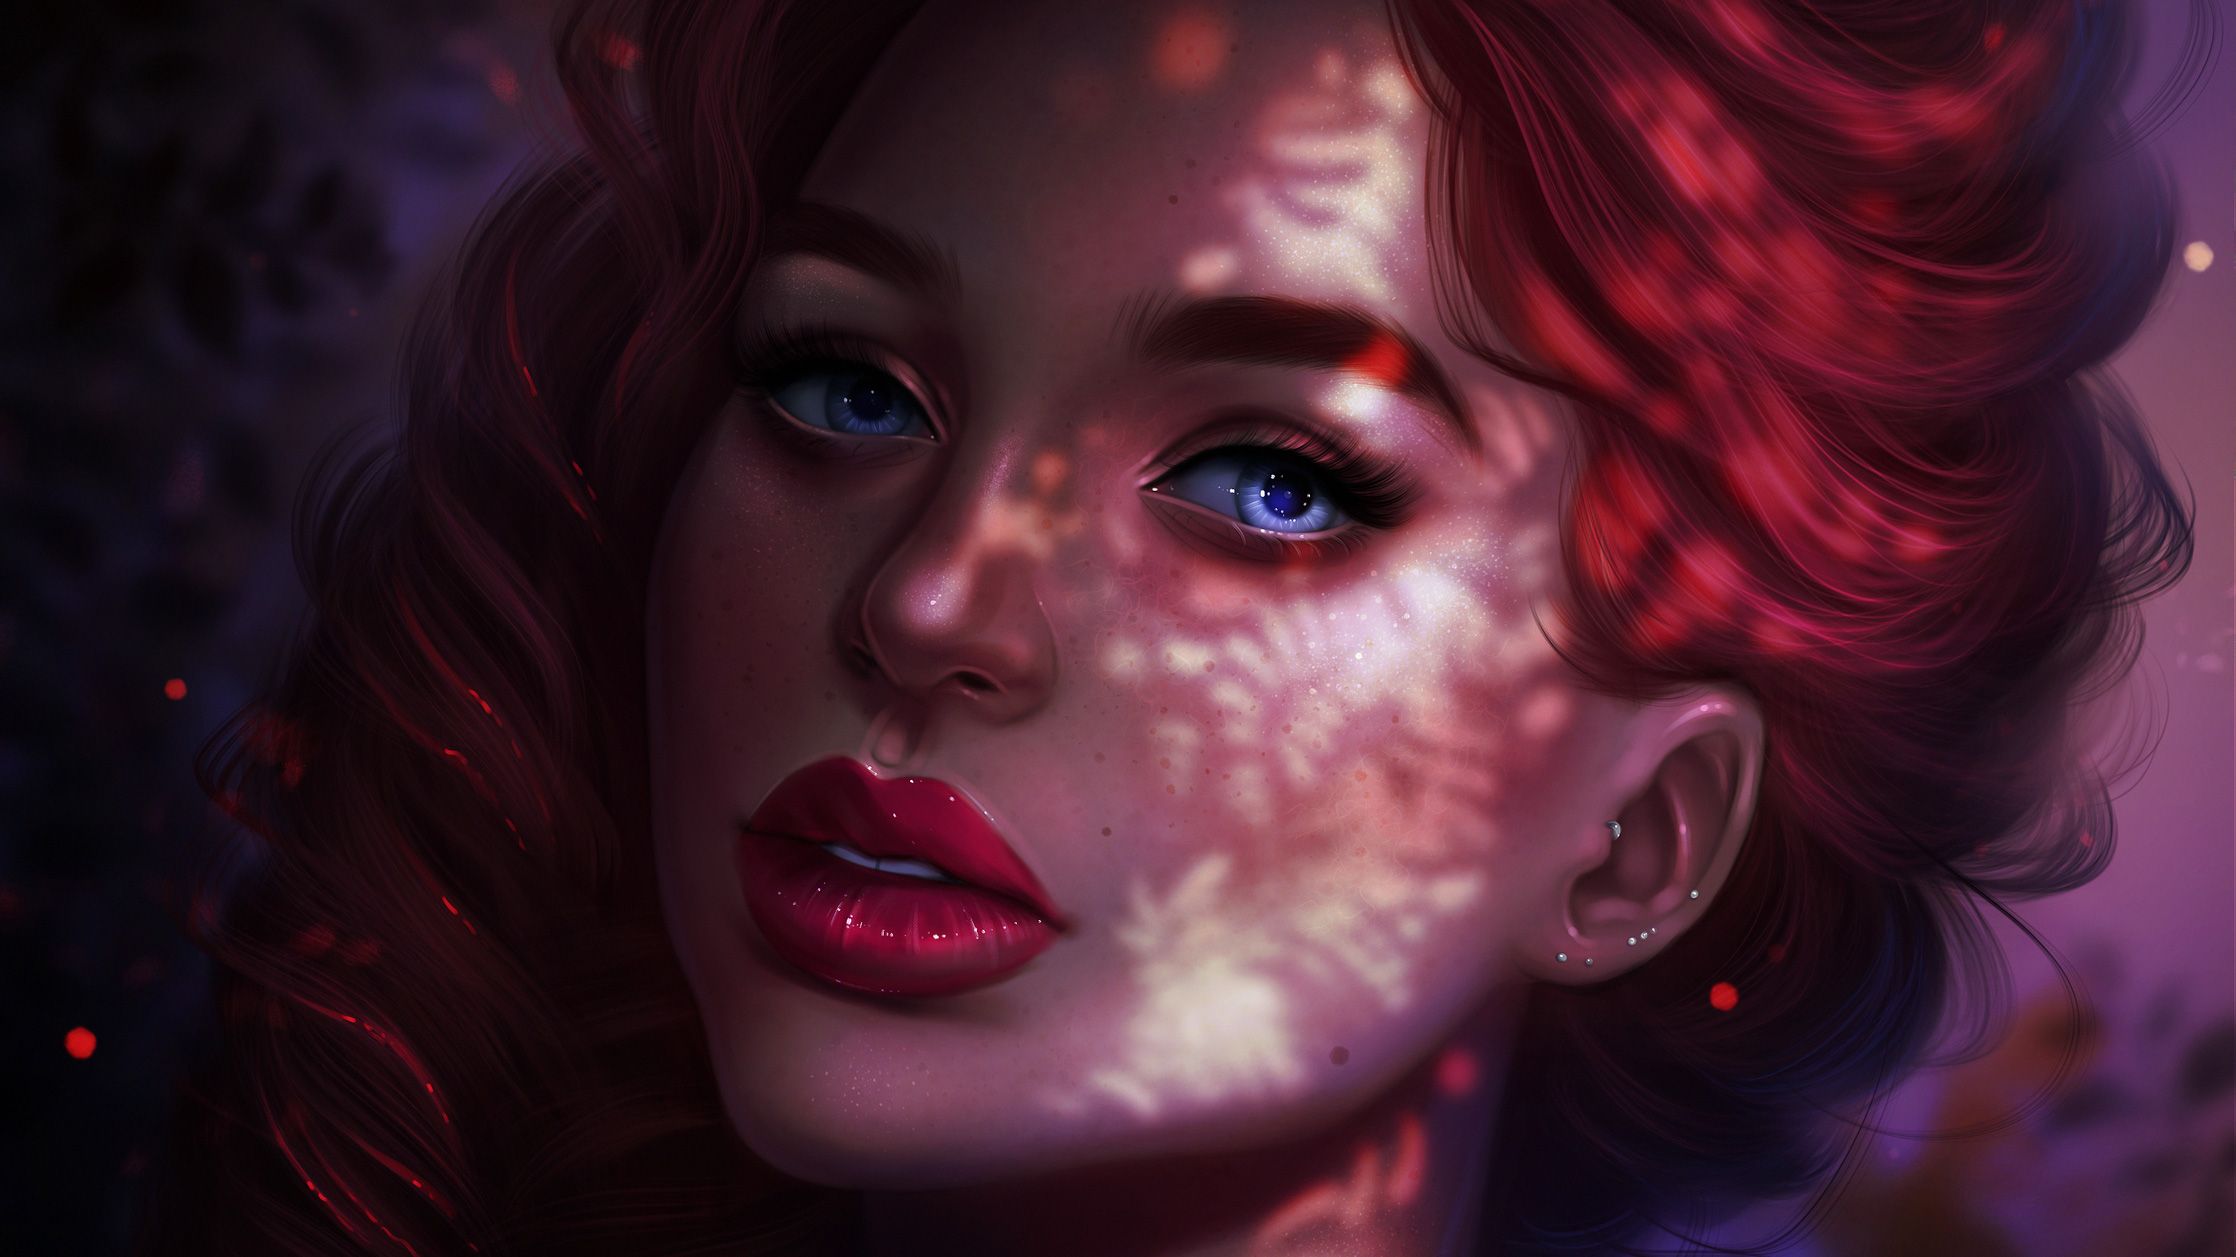 Red Head Girl Portrait Face Closeup, HD Fantasy Girls, 4k